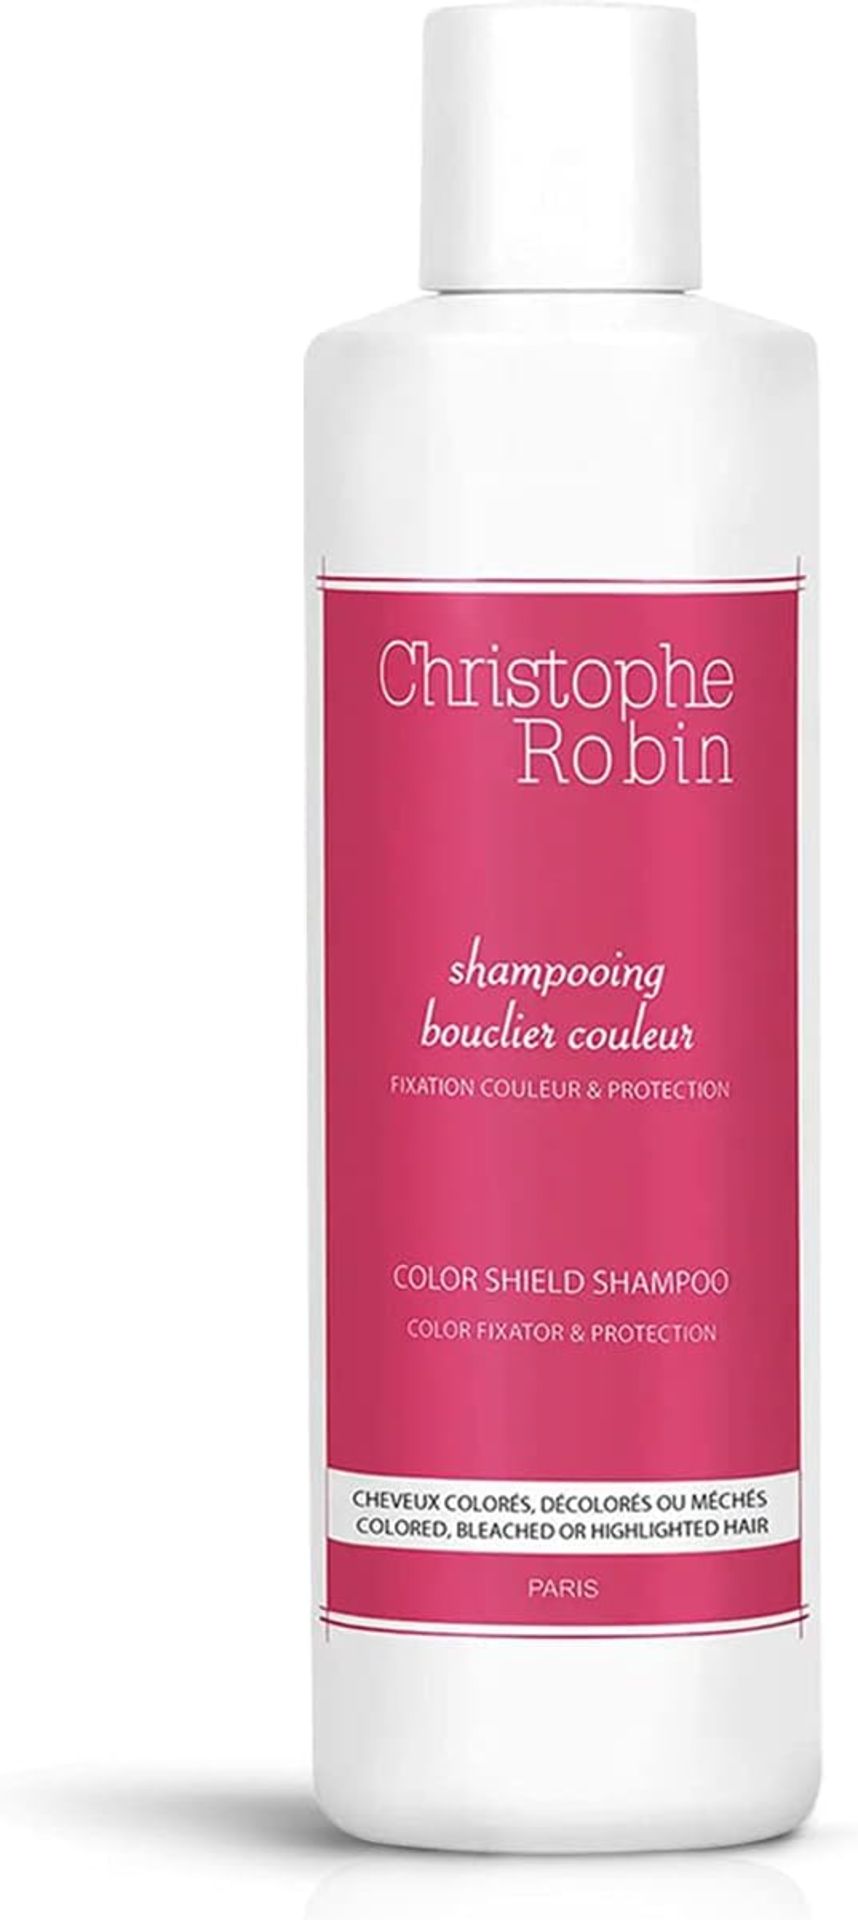 10 x Christophe Robin Colour Fixator & Protection Shampoo RRP £310